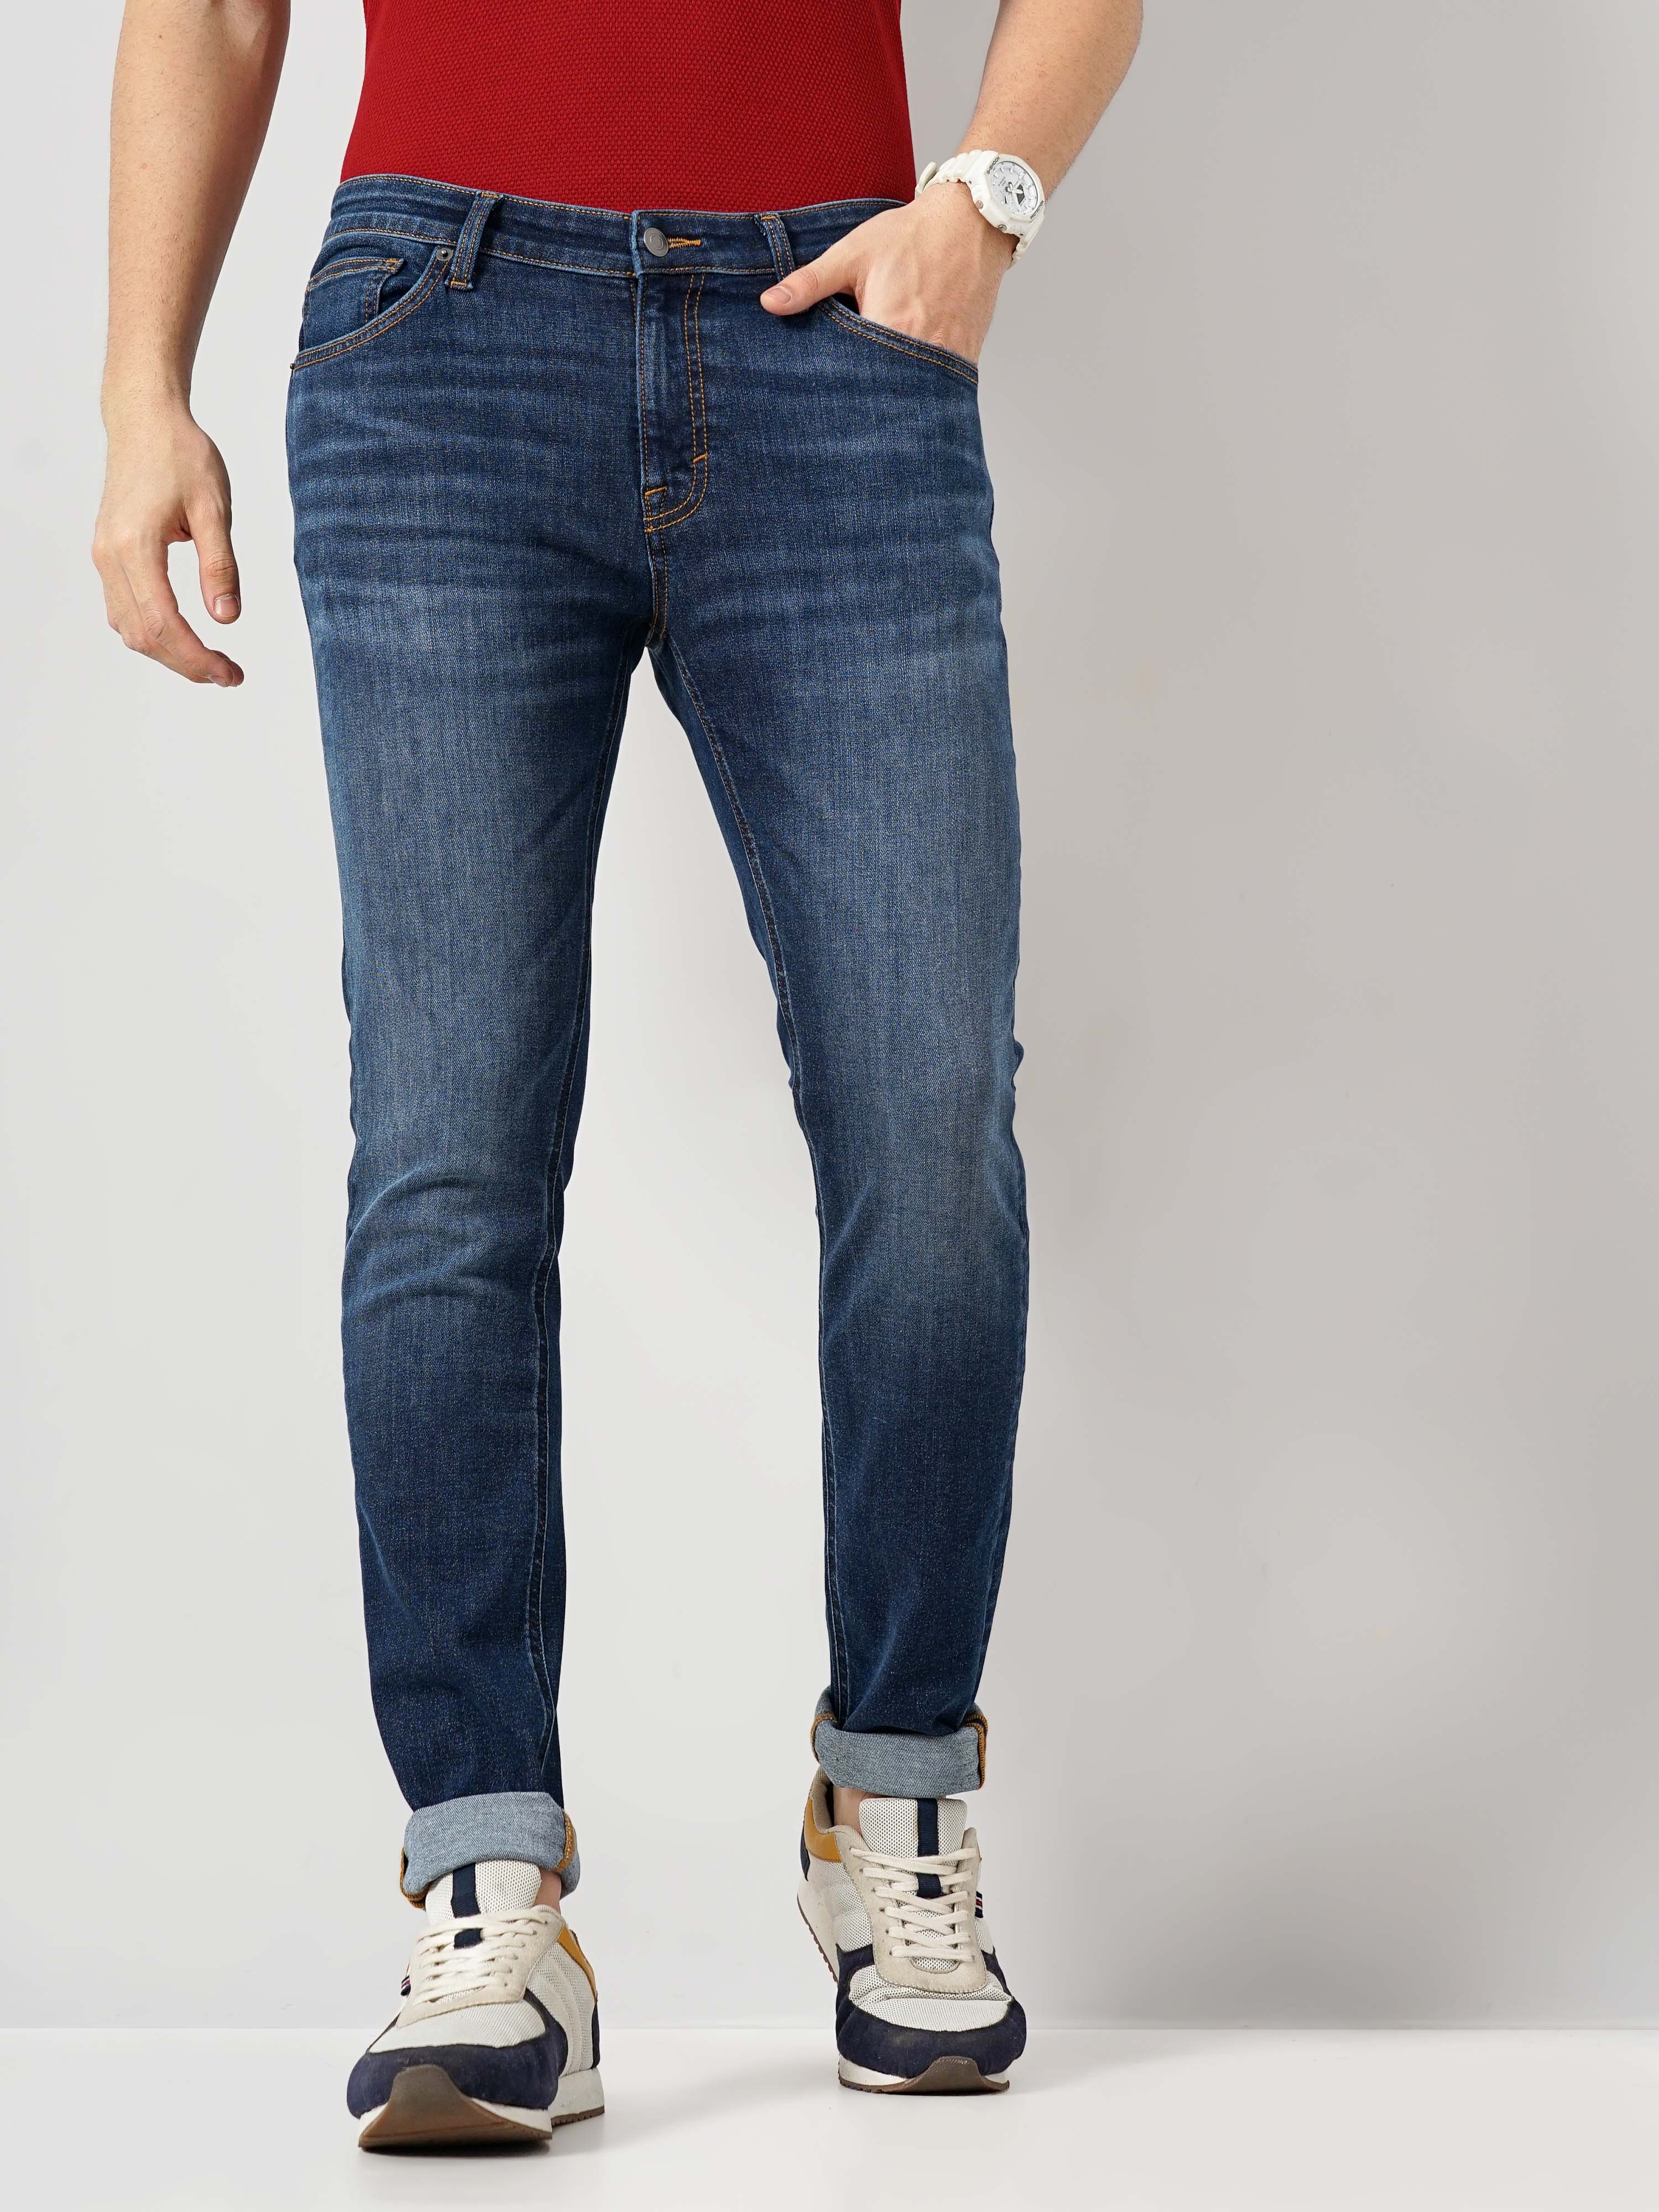 Celio Men's Solid Innovation Jeans